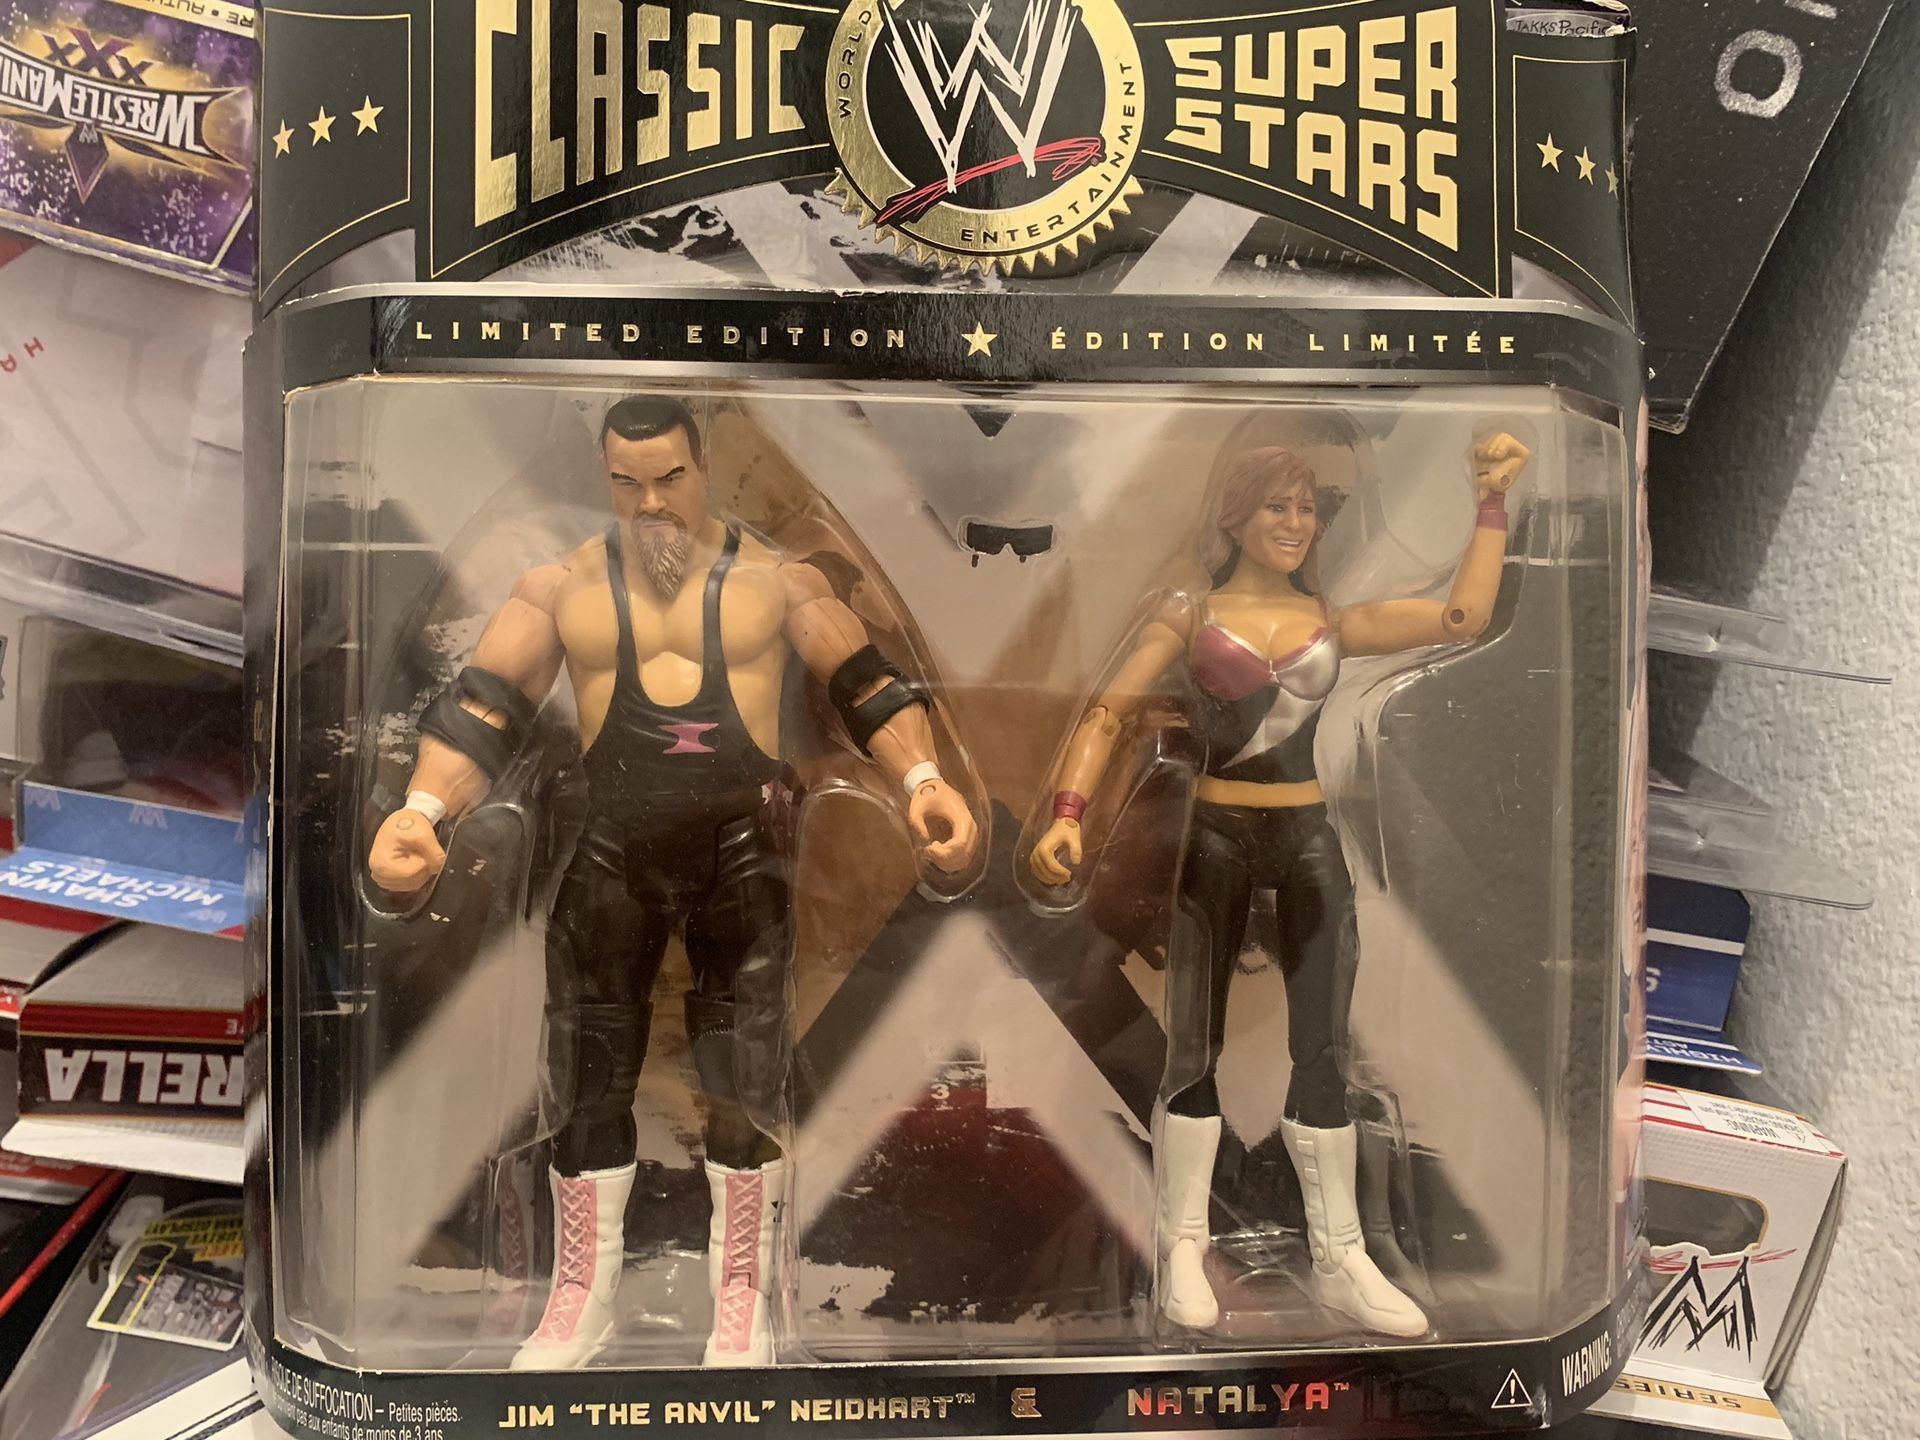 WWE Classic Superstars Jim “The Anvil” Neidhart and Natalya Action Figures